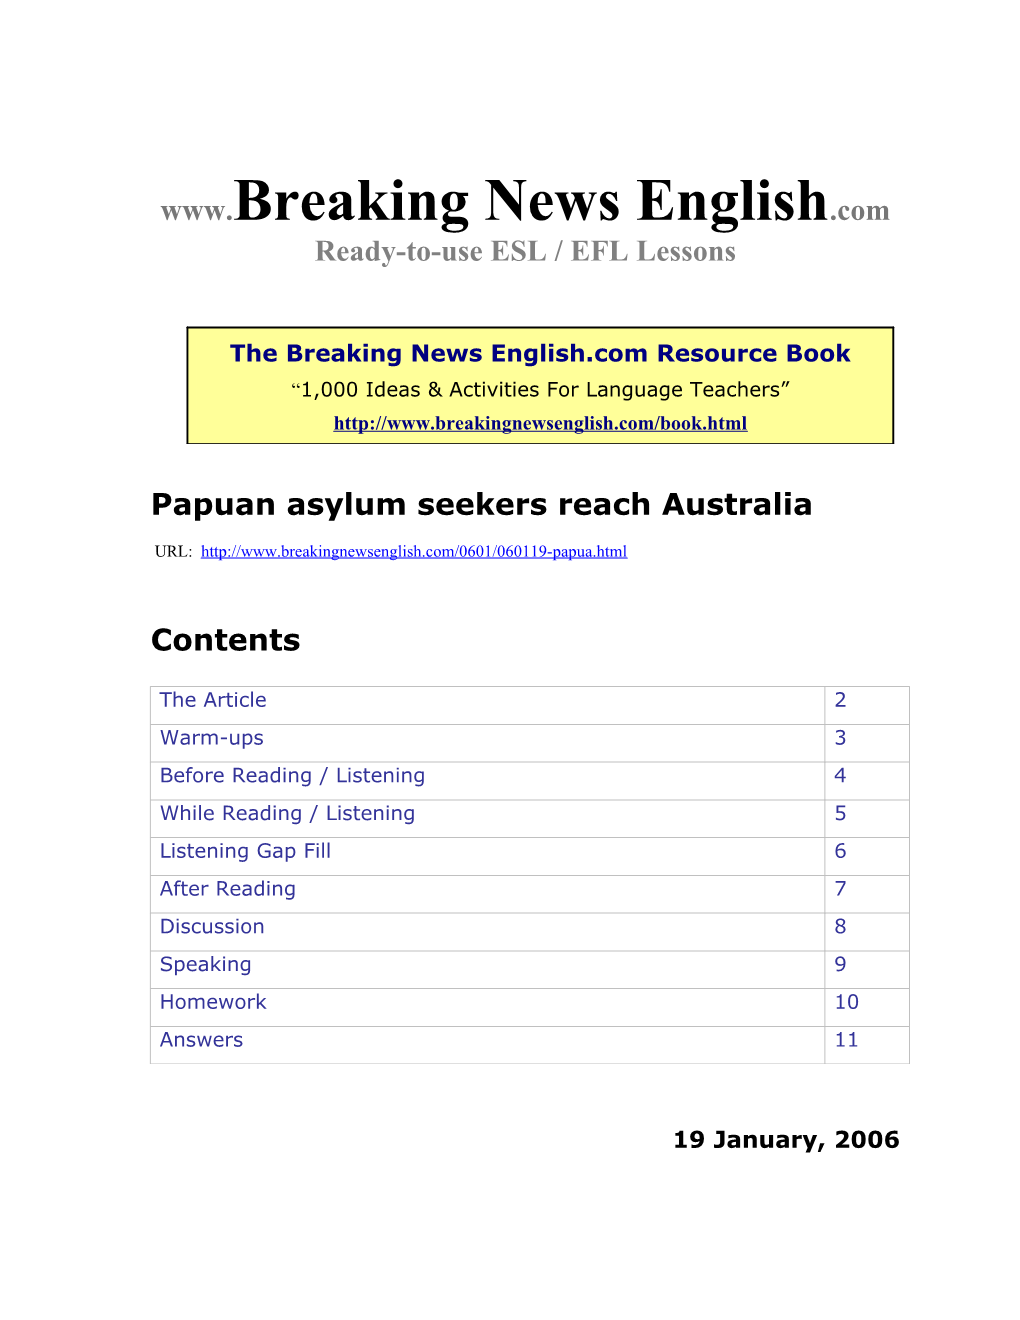 Papuan Asylum Seekers Reach Australia